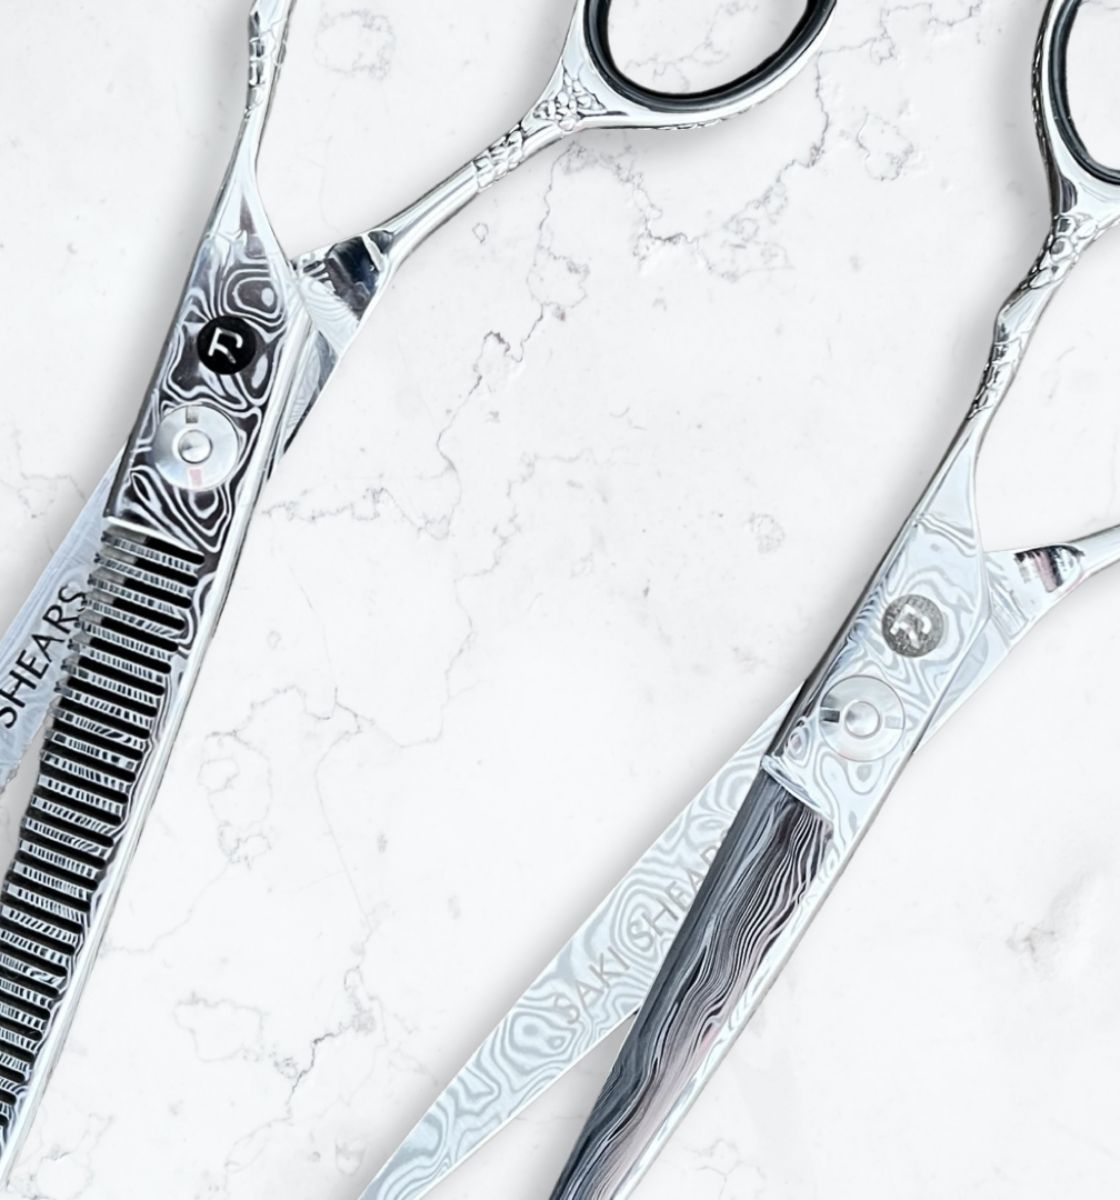 Hair Cutting Shear Sets japanese steel scissors